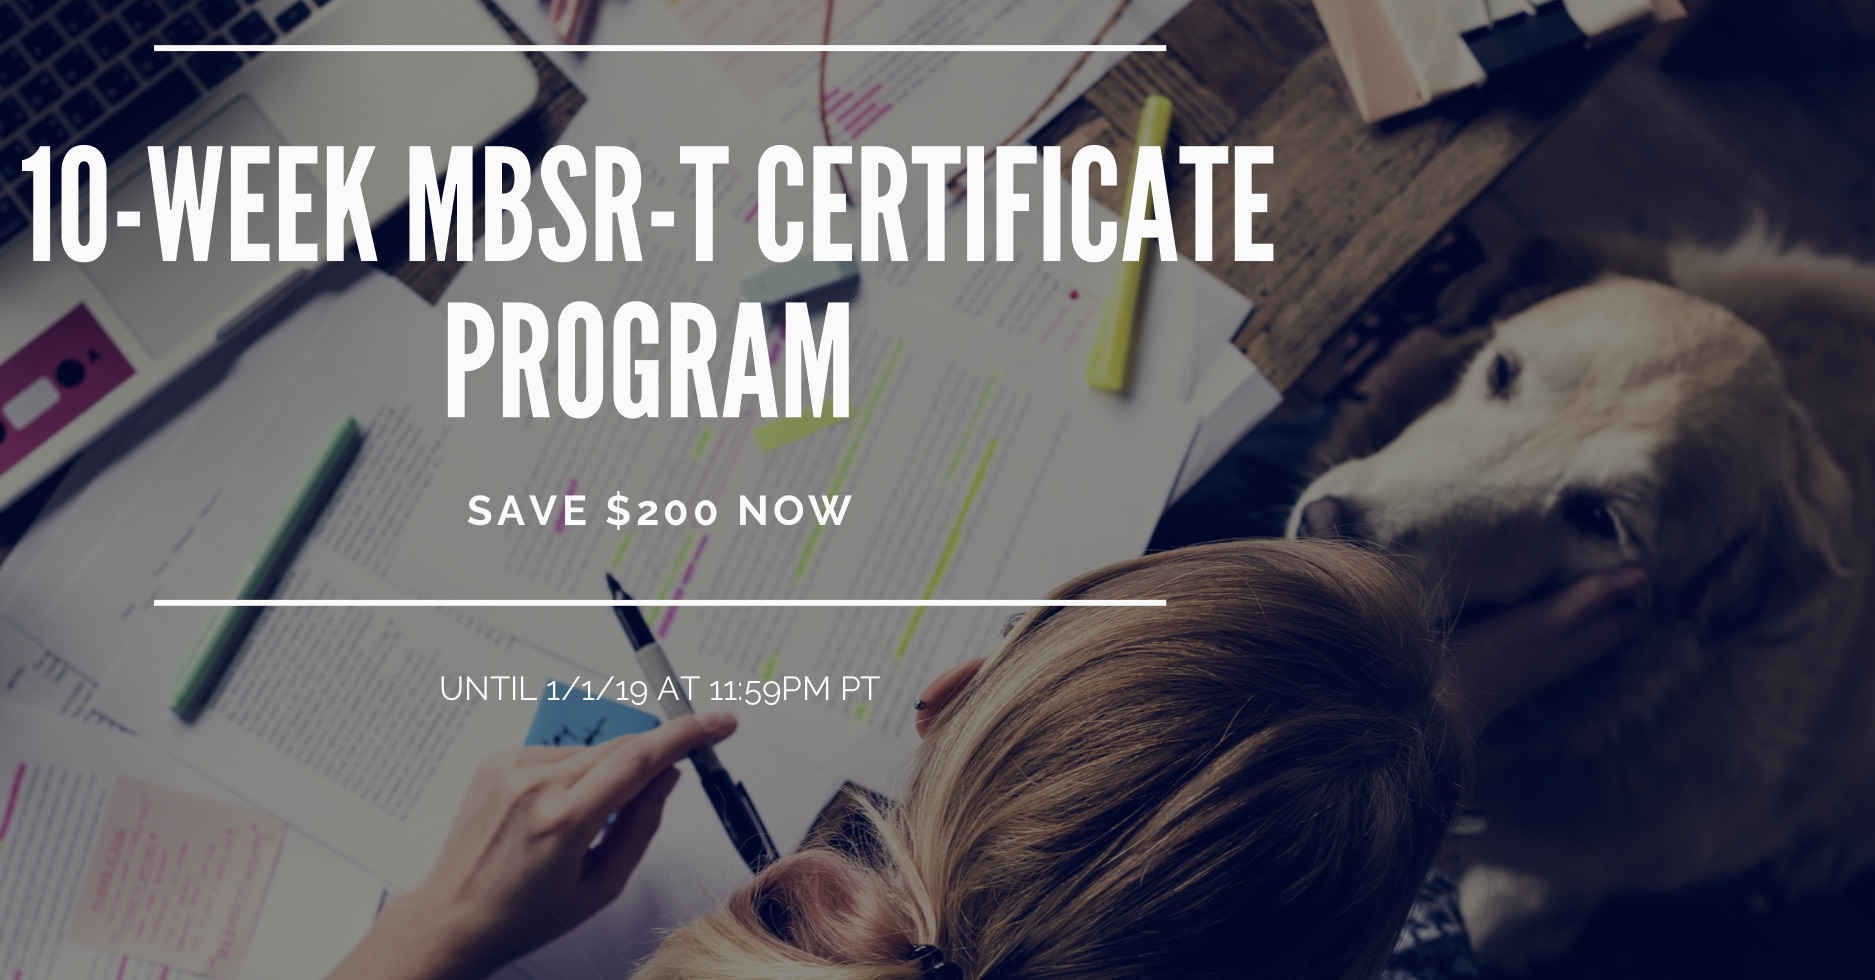 10-week mbsr-t certificate program.jpg